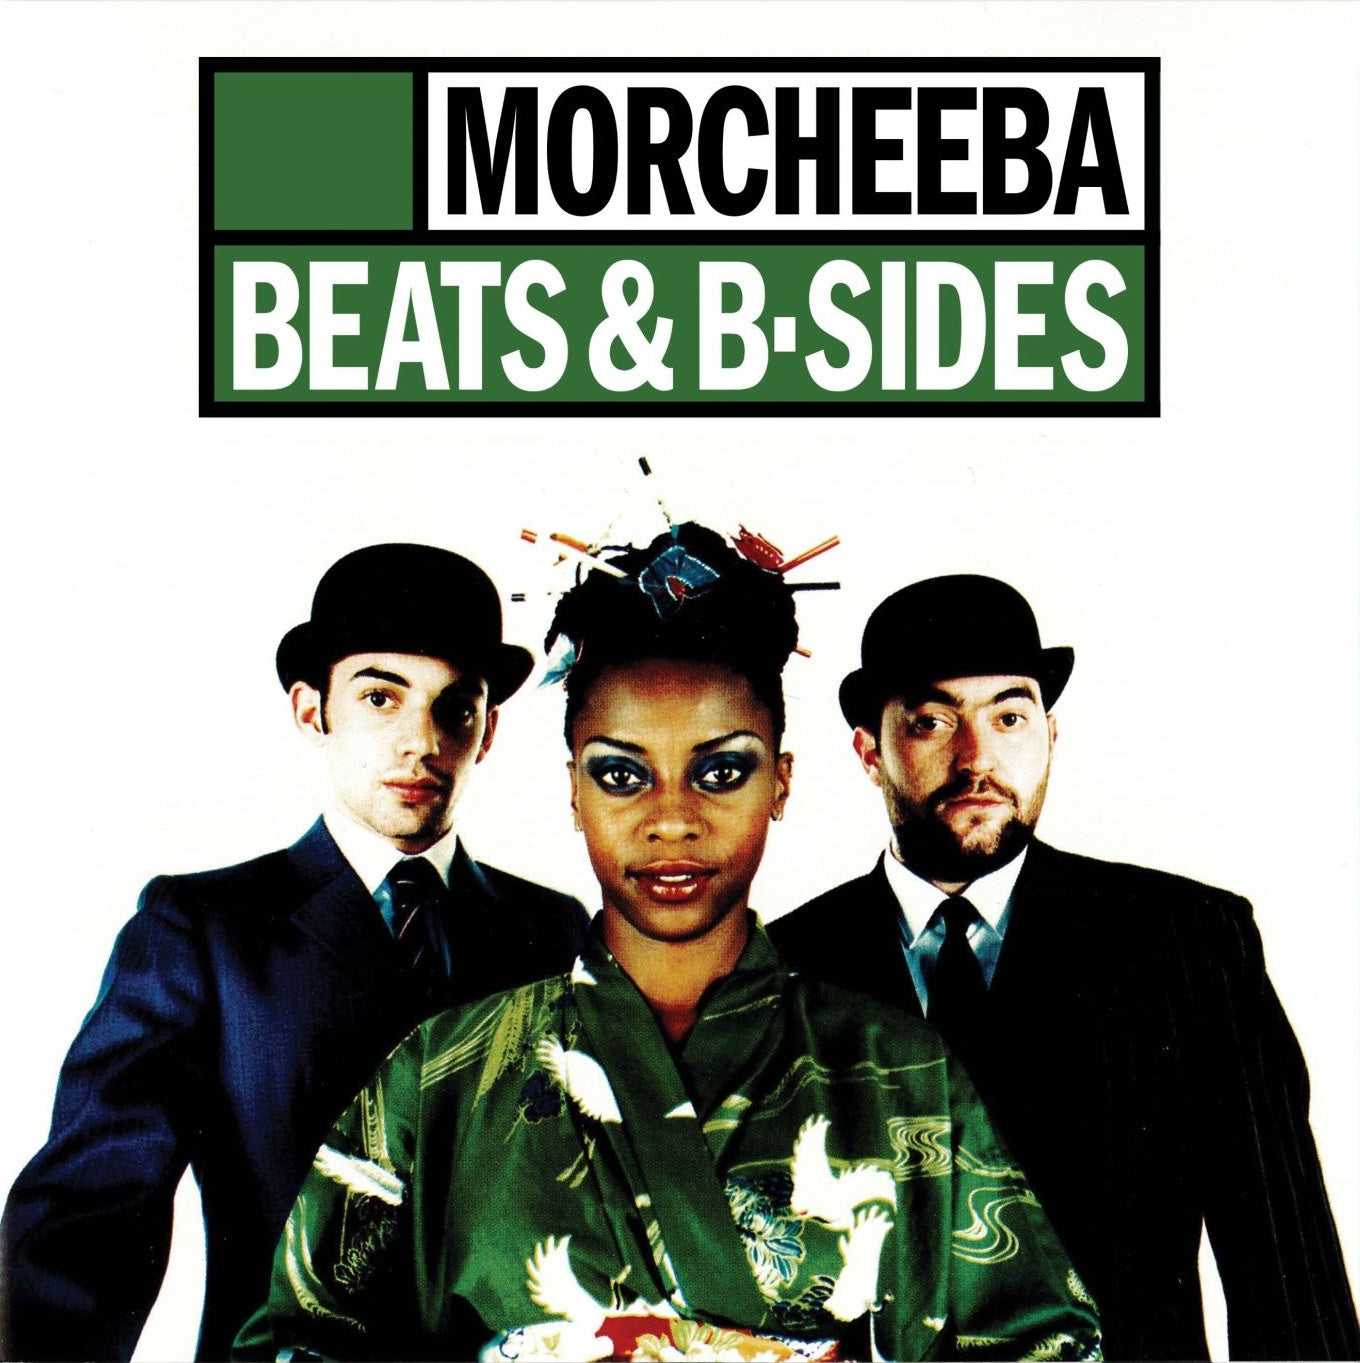 Morcheeba - B-Sides and Beats RSD24 (Vinyl LP)